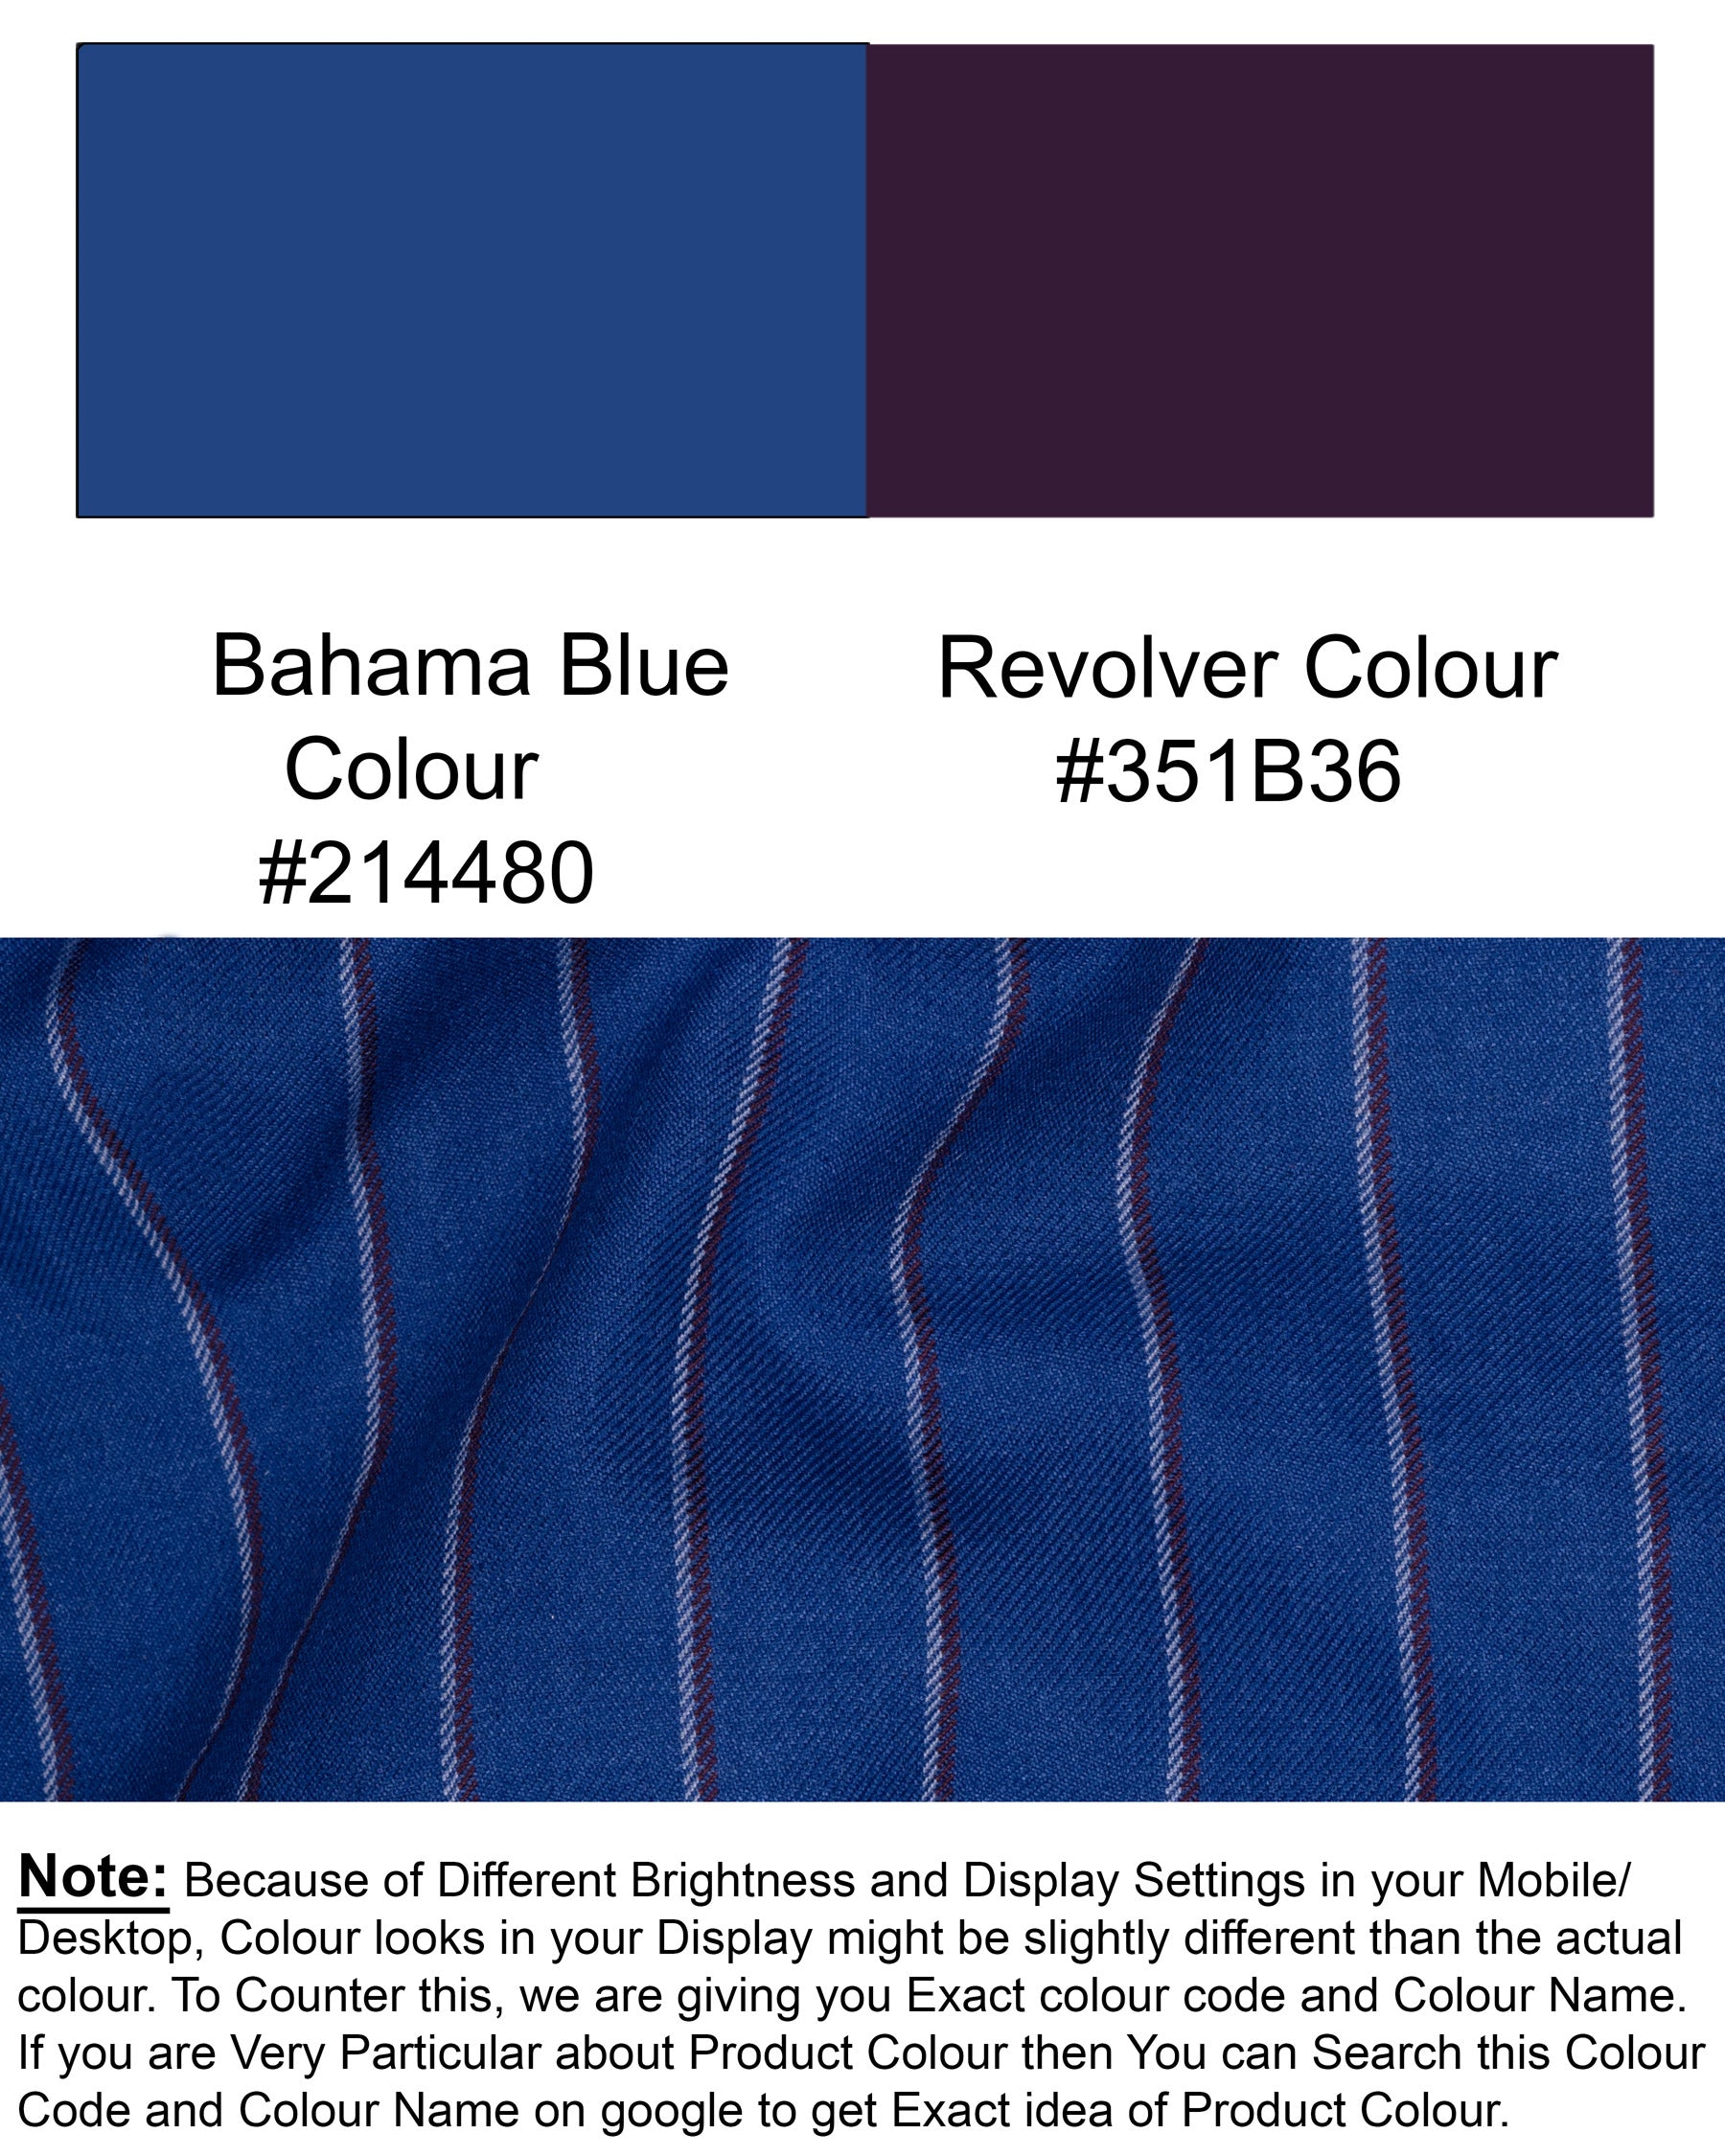 Bahama Blue Striped Woolrich Sports Blazer BL1521-SB-PP-36, BL1521-SB-PP-38, BL1521-SB-PP-40, BL1521-SB-PP-42, BL1521-SB-PP-44, BL1521-SB-PP-46, BL1521-SB-PP-48, BL1521-SB-PP-50, BL1521-SB-PP-52, BL1521-SB-PP-54, BL1521-SB-PP-56, BL1521-SB-PP-58, BL1521-SB-PP-60